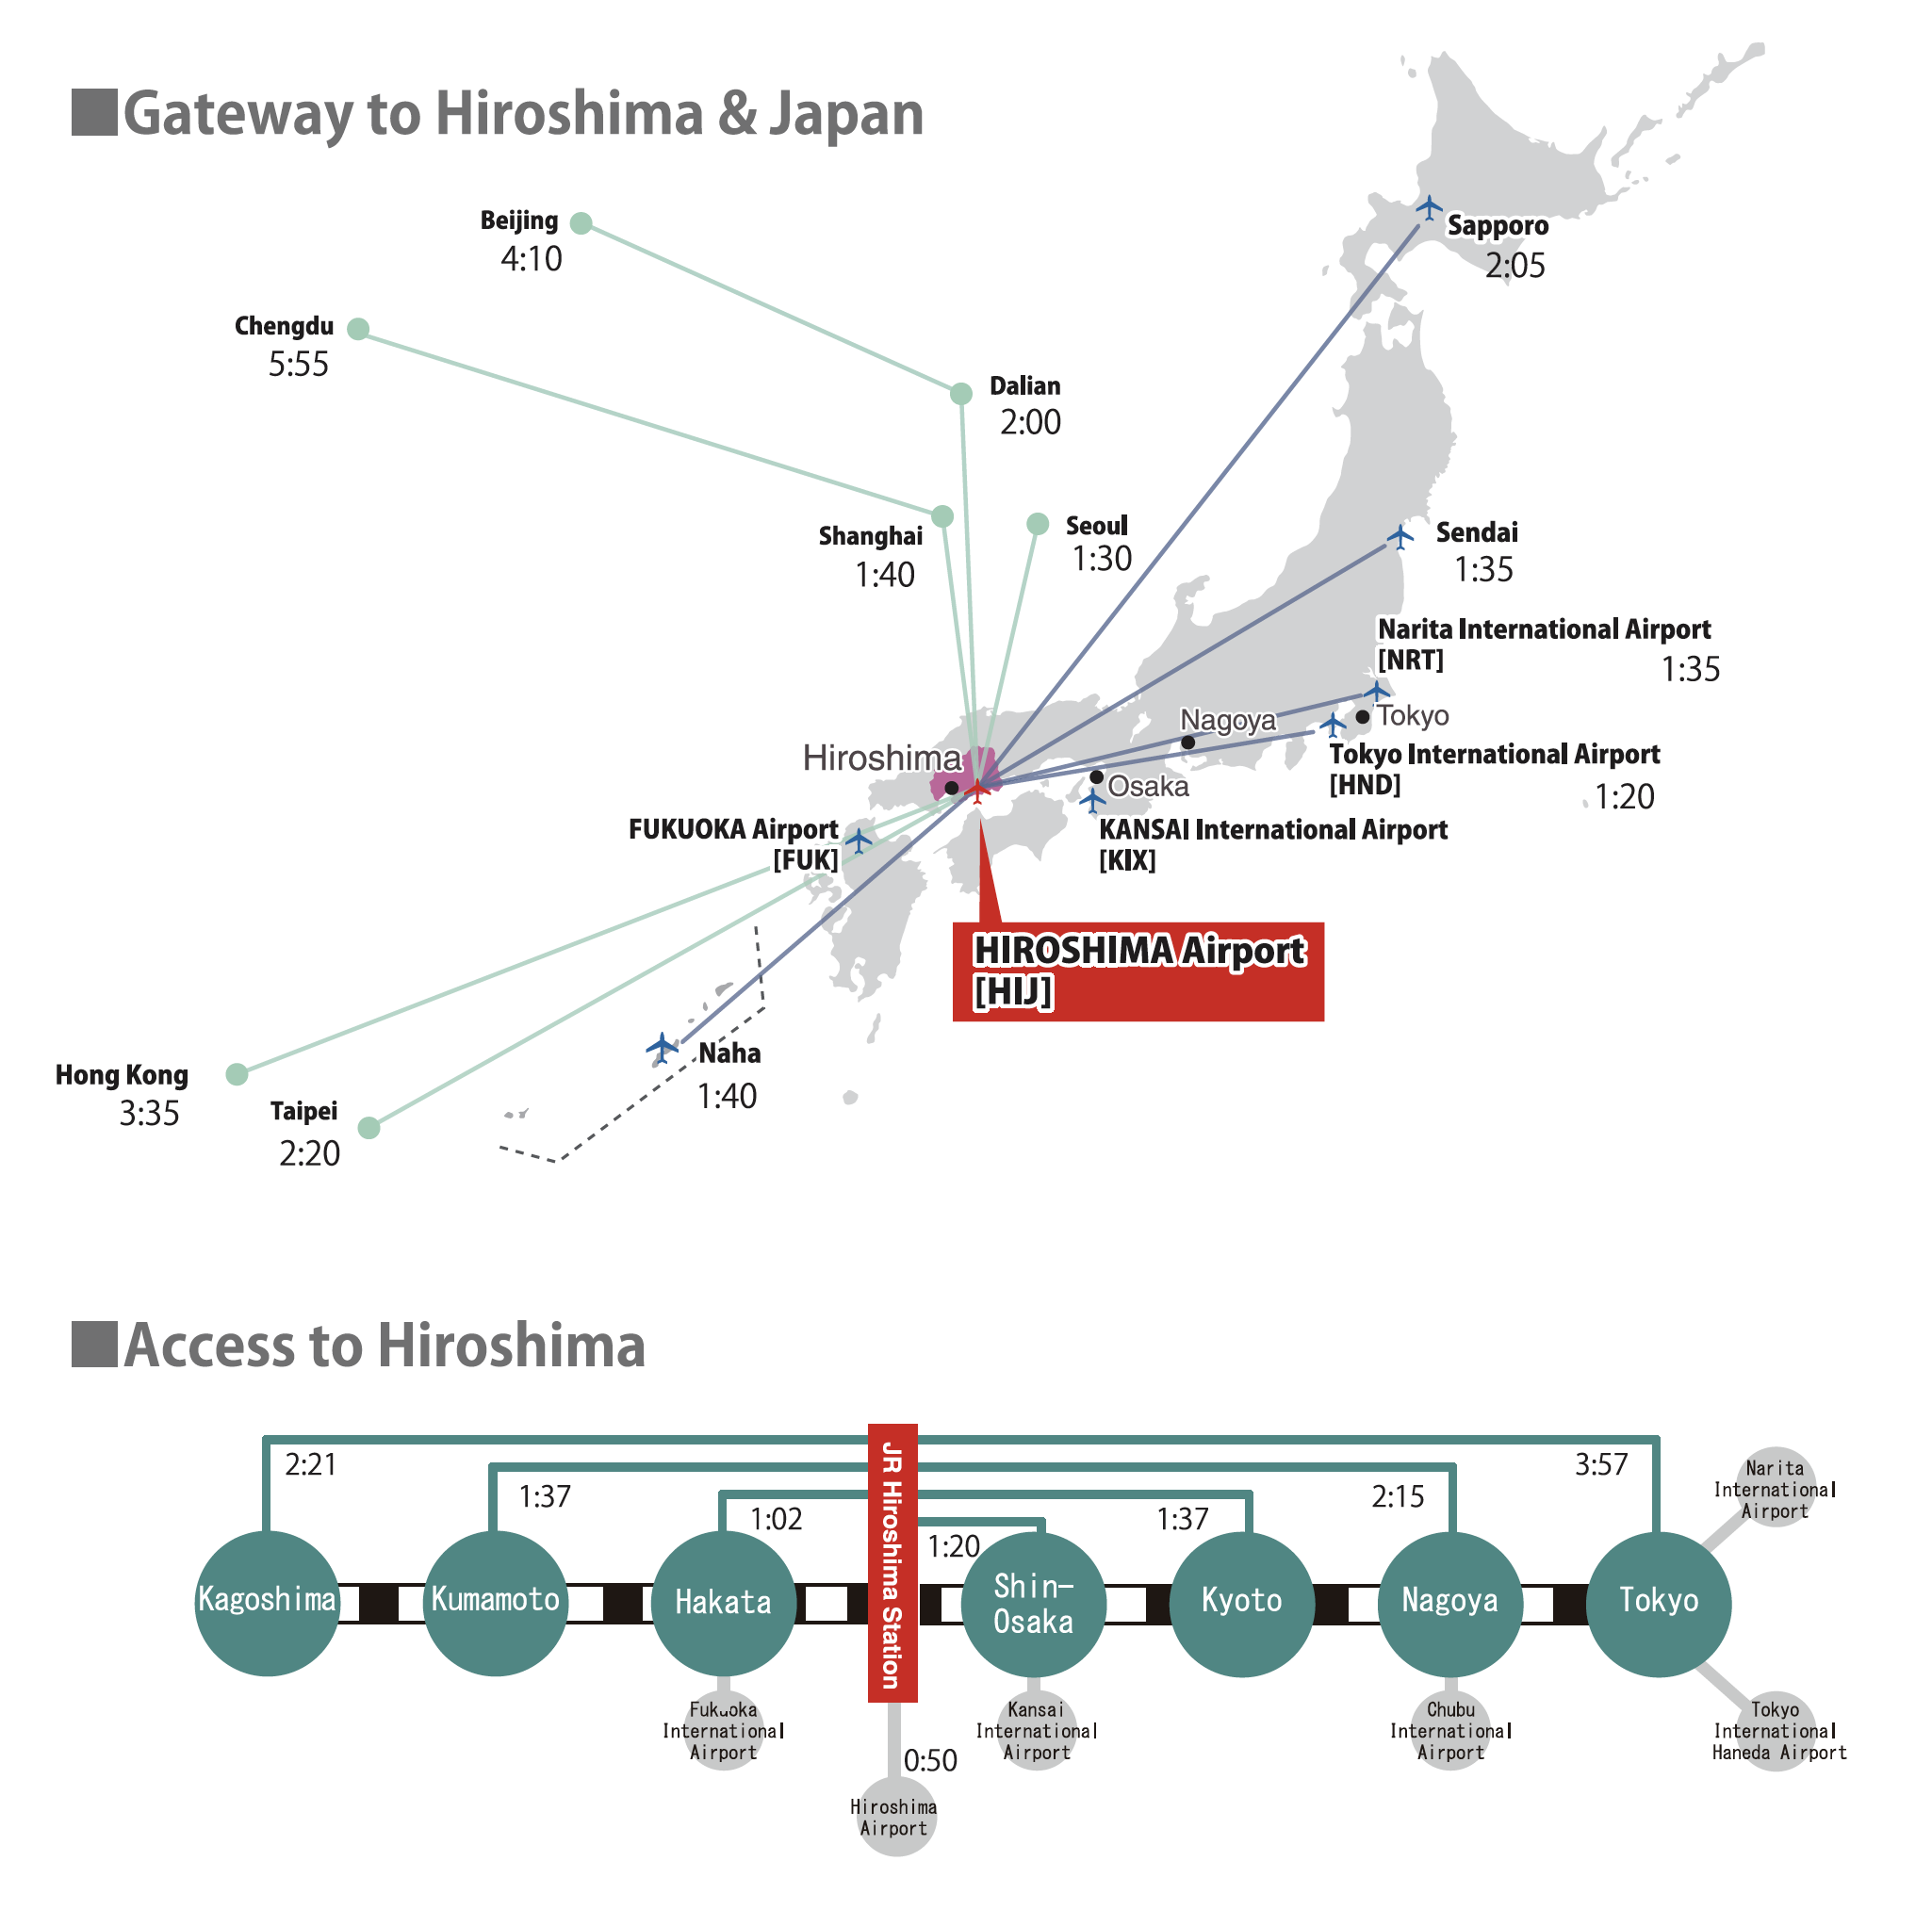 Gateway to Hiroshima & Japan Access to Hiroshima